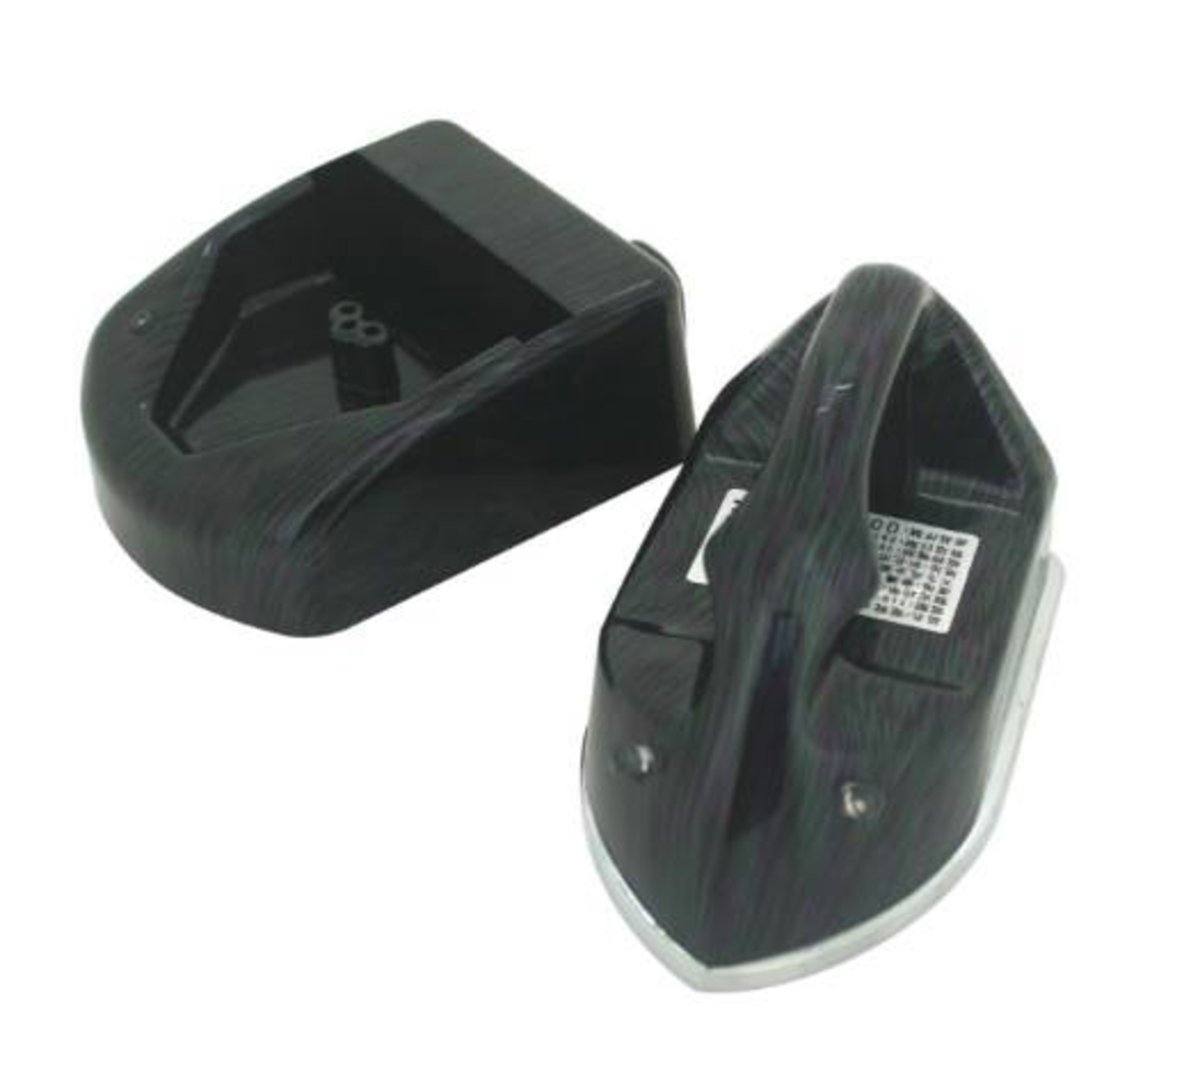 TSL - Ultra Mini Cordless Handheld Iron｜Travel Iron - Black